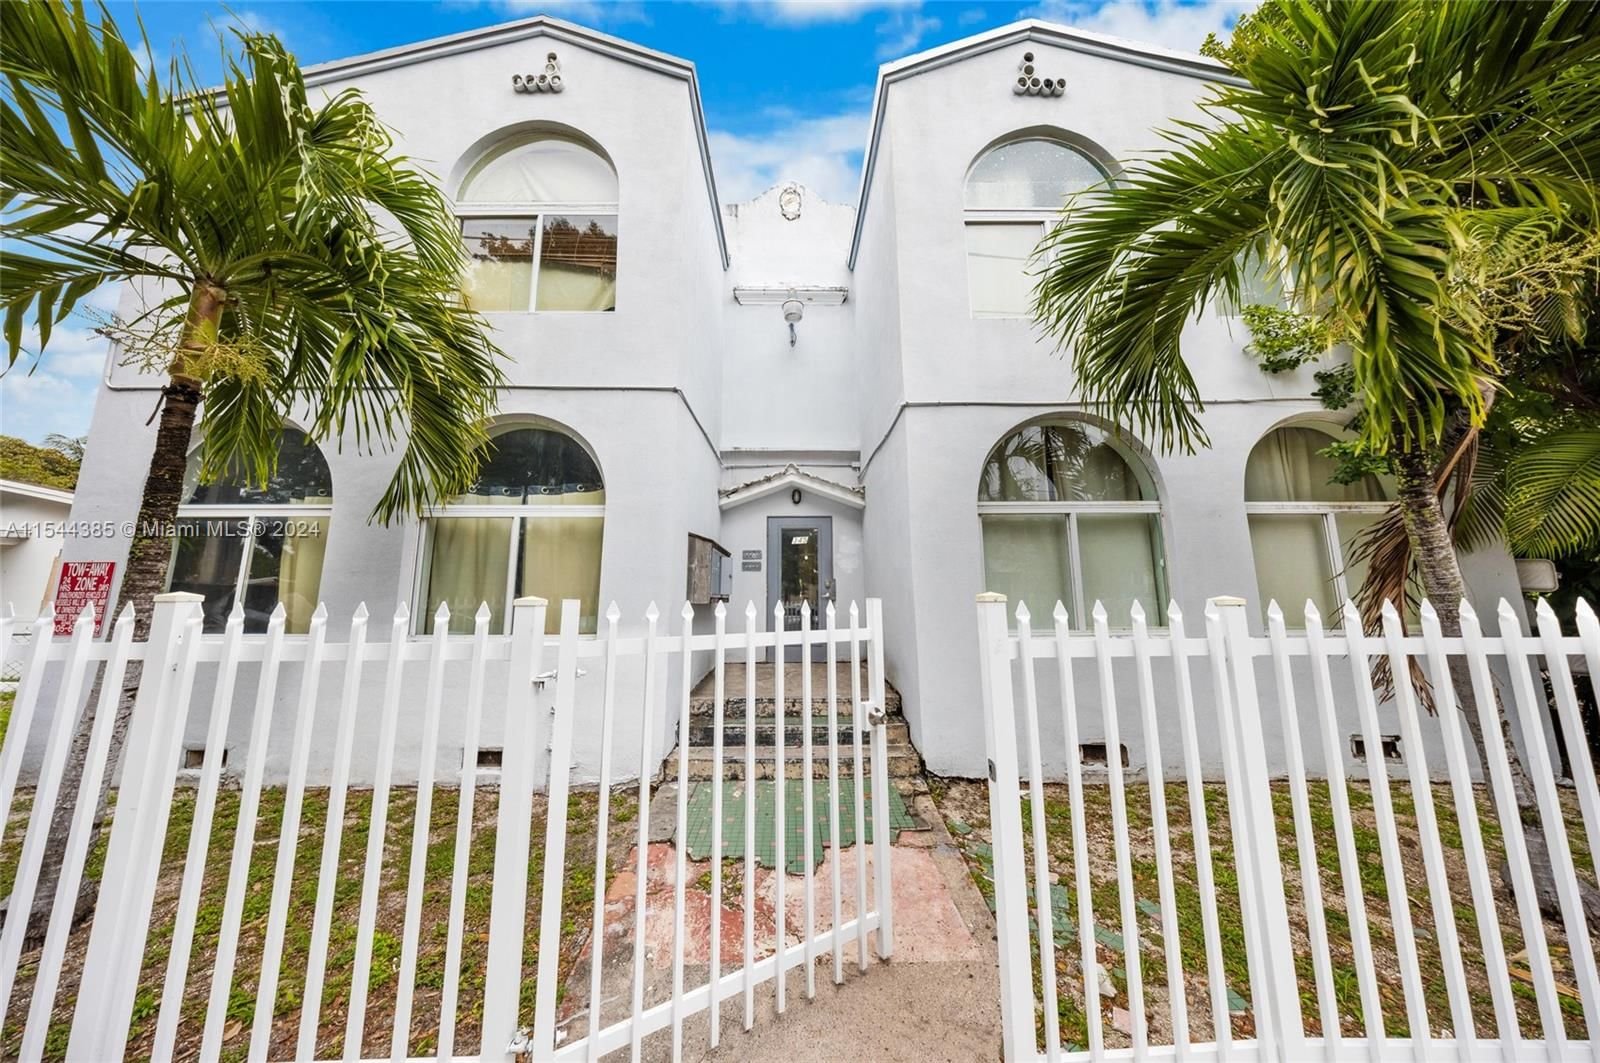 Real estate property located at 345 34th St, Miami-Dade County, Miami, FL